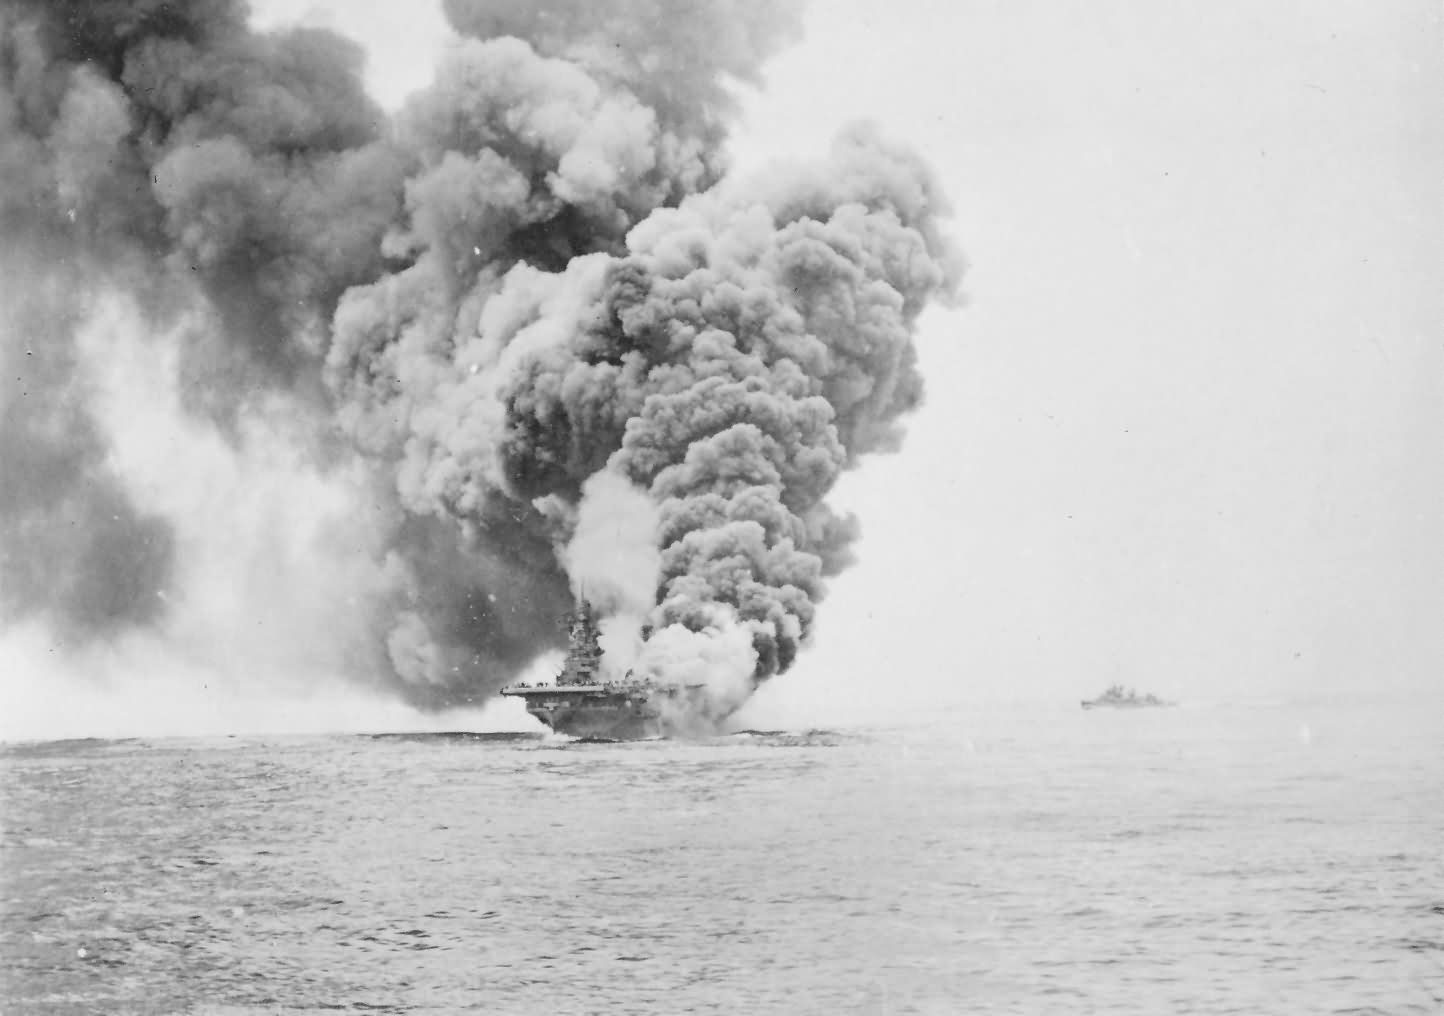 Burning aircraft carrier USS Bunker Hill CV-17 May 11, 1945